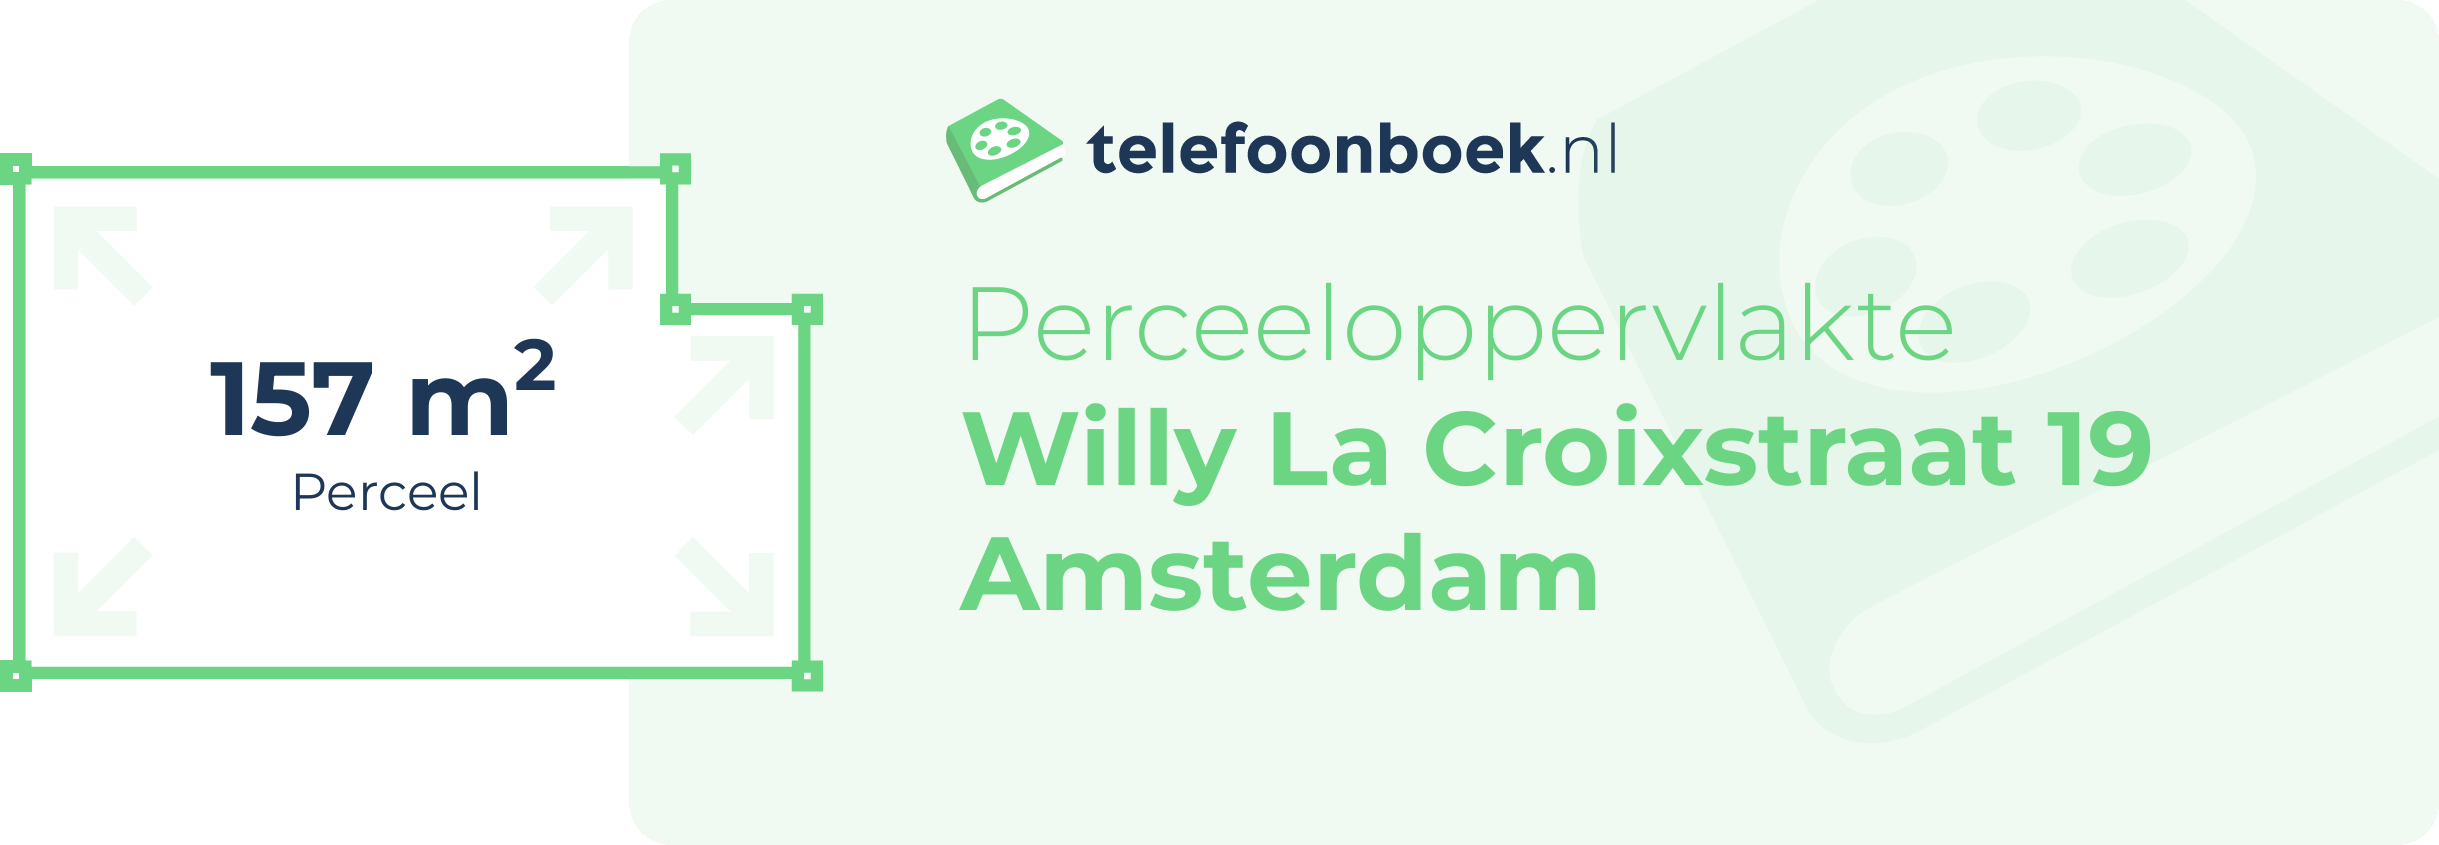 Perceeloppervlakte Willy La Croixstraat 19 Amsterdam